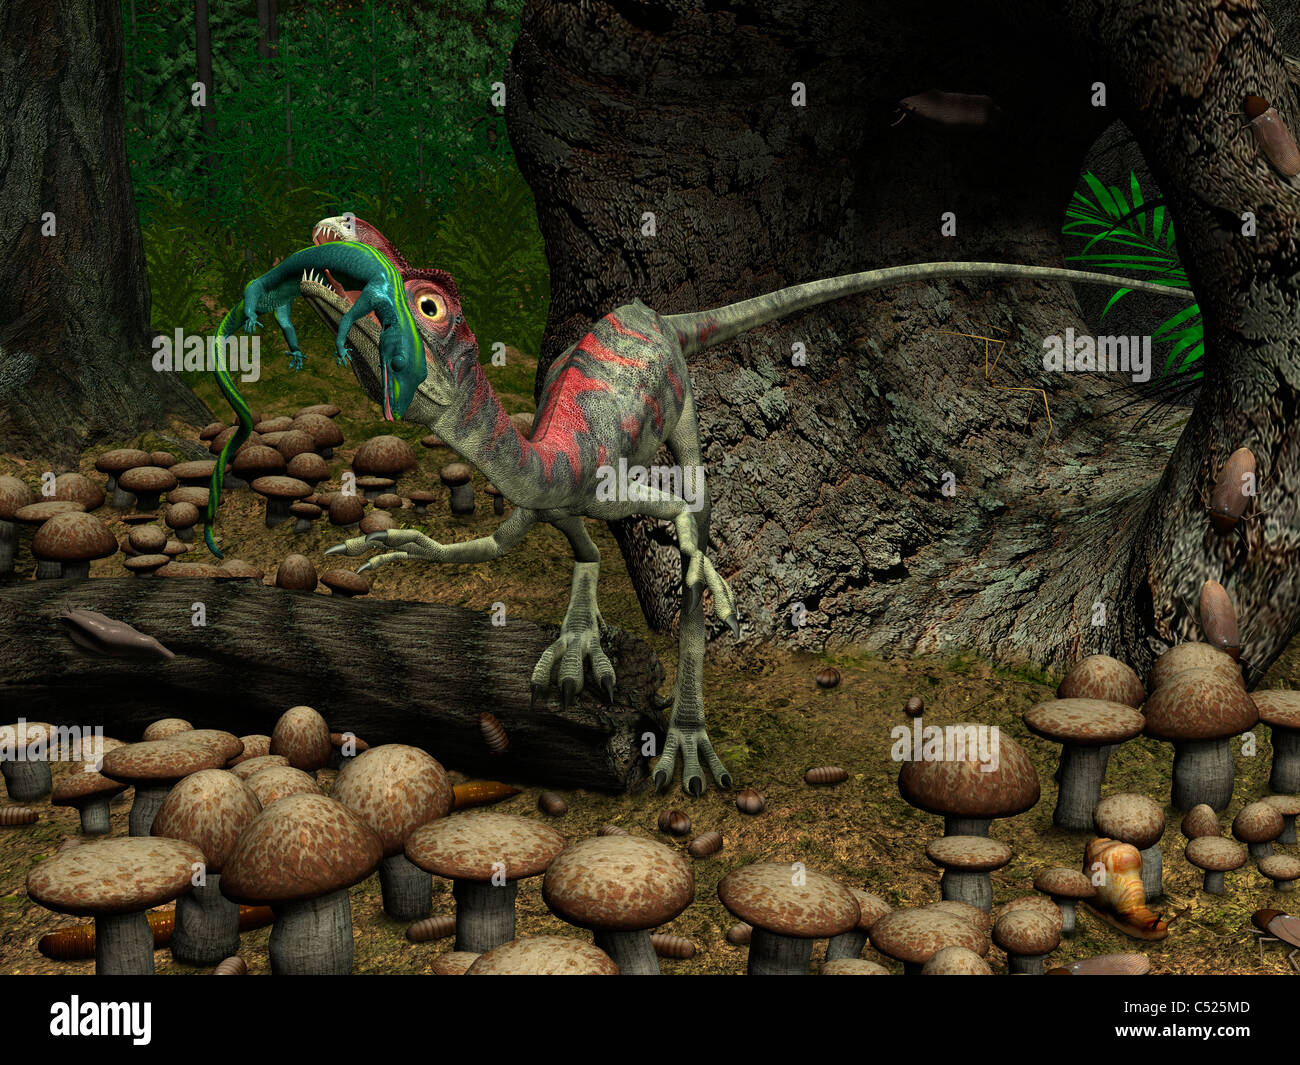 A Compsognathus prepares to swallow a small lizard. Stock Photo